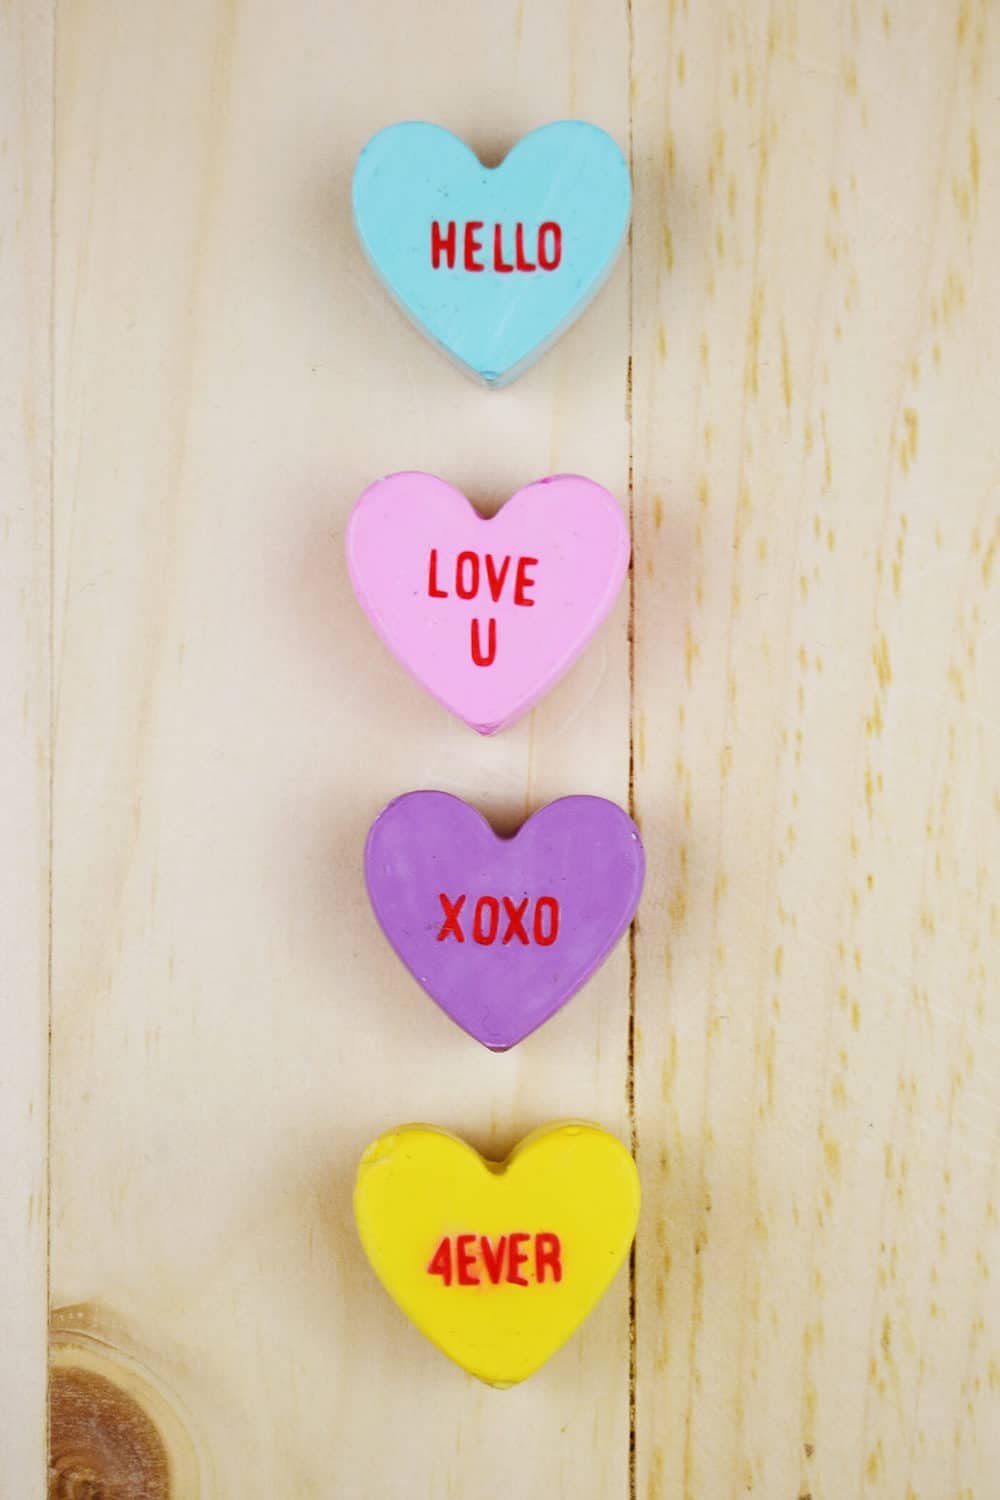 Conversation heart crafts for Valentine's Day